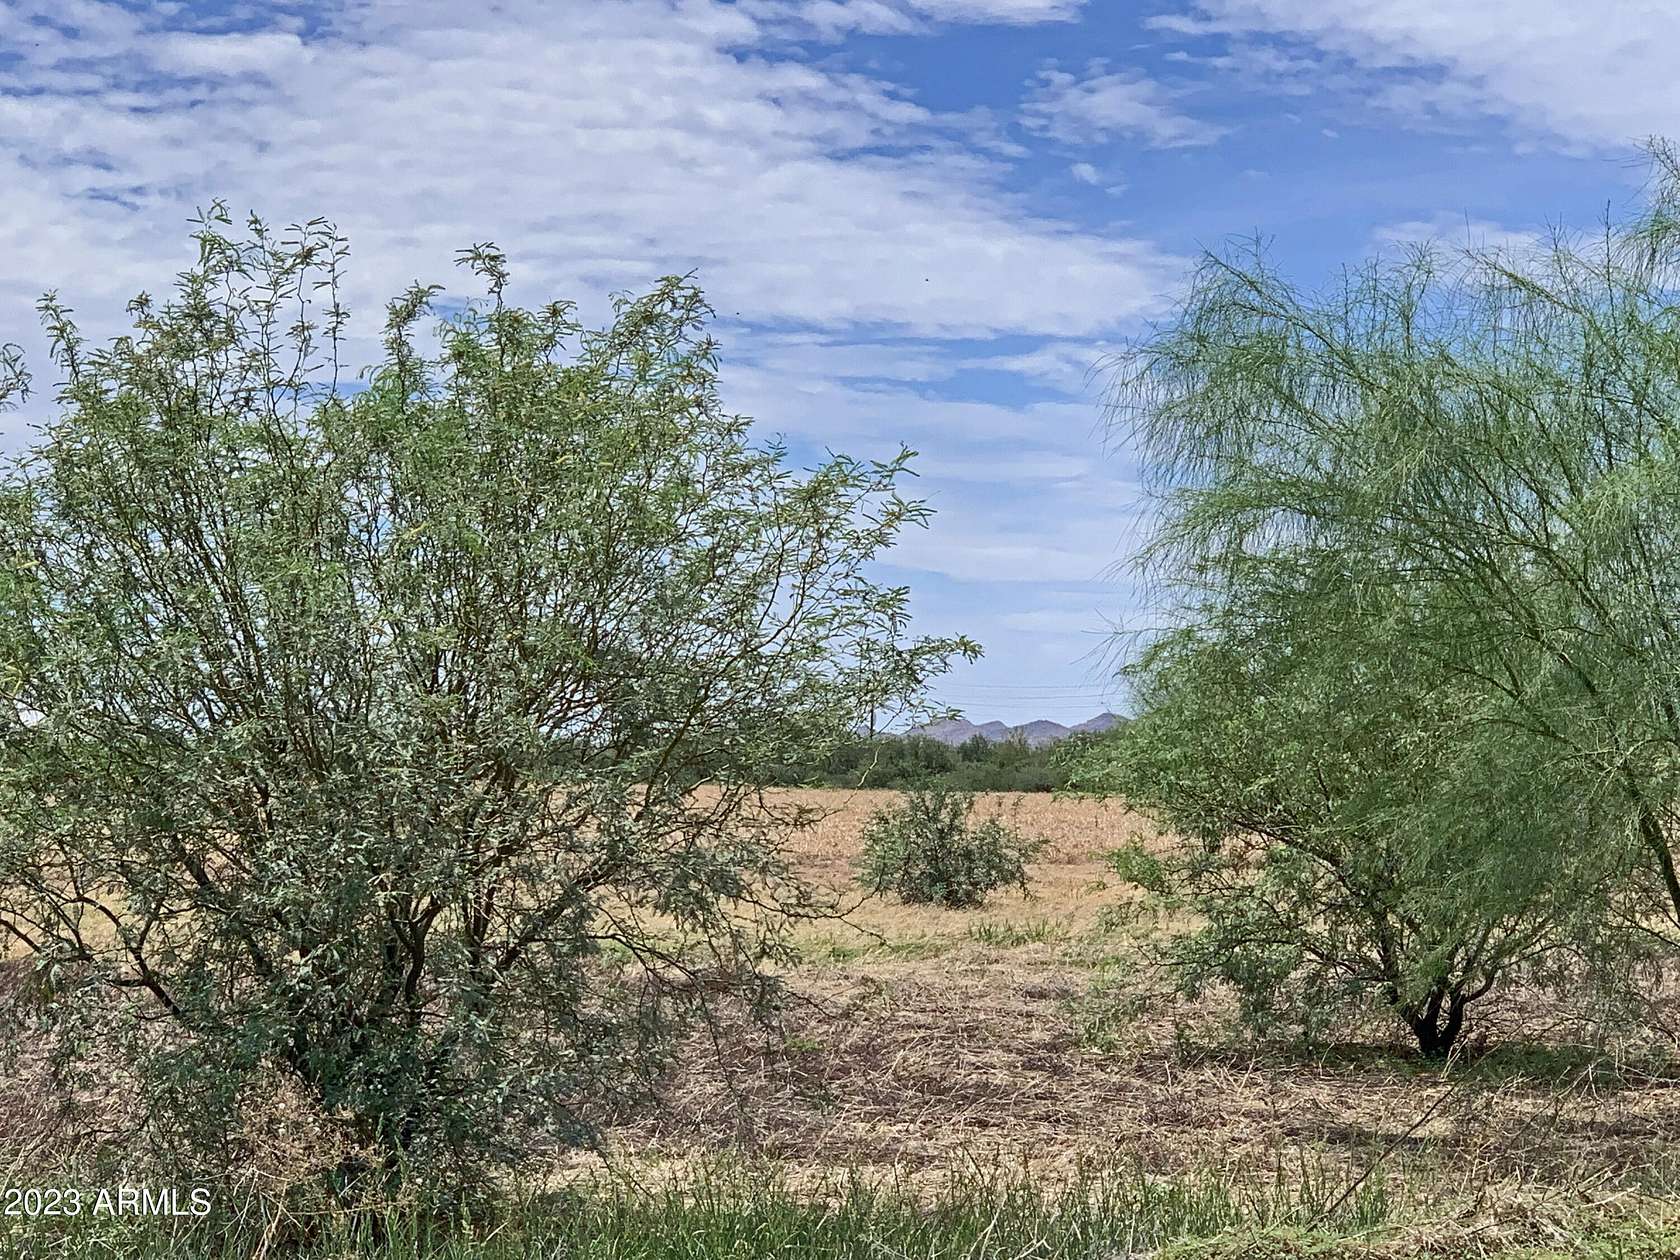 3.9 Acres of Land for Sale in Casa Grande, Arizona